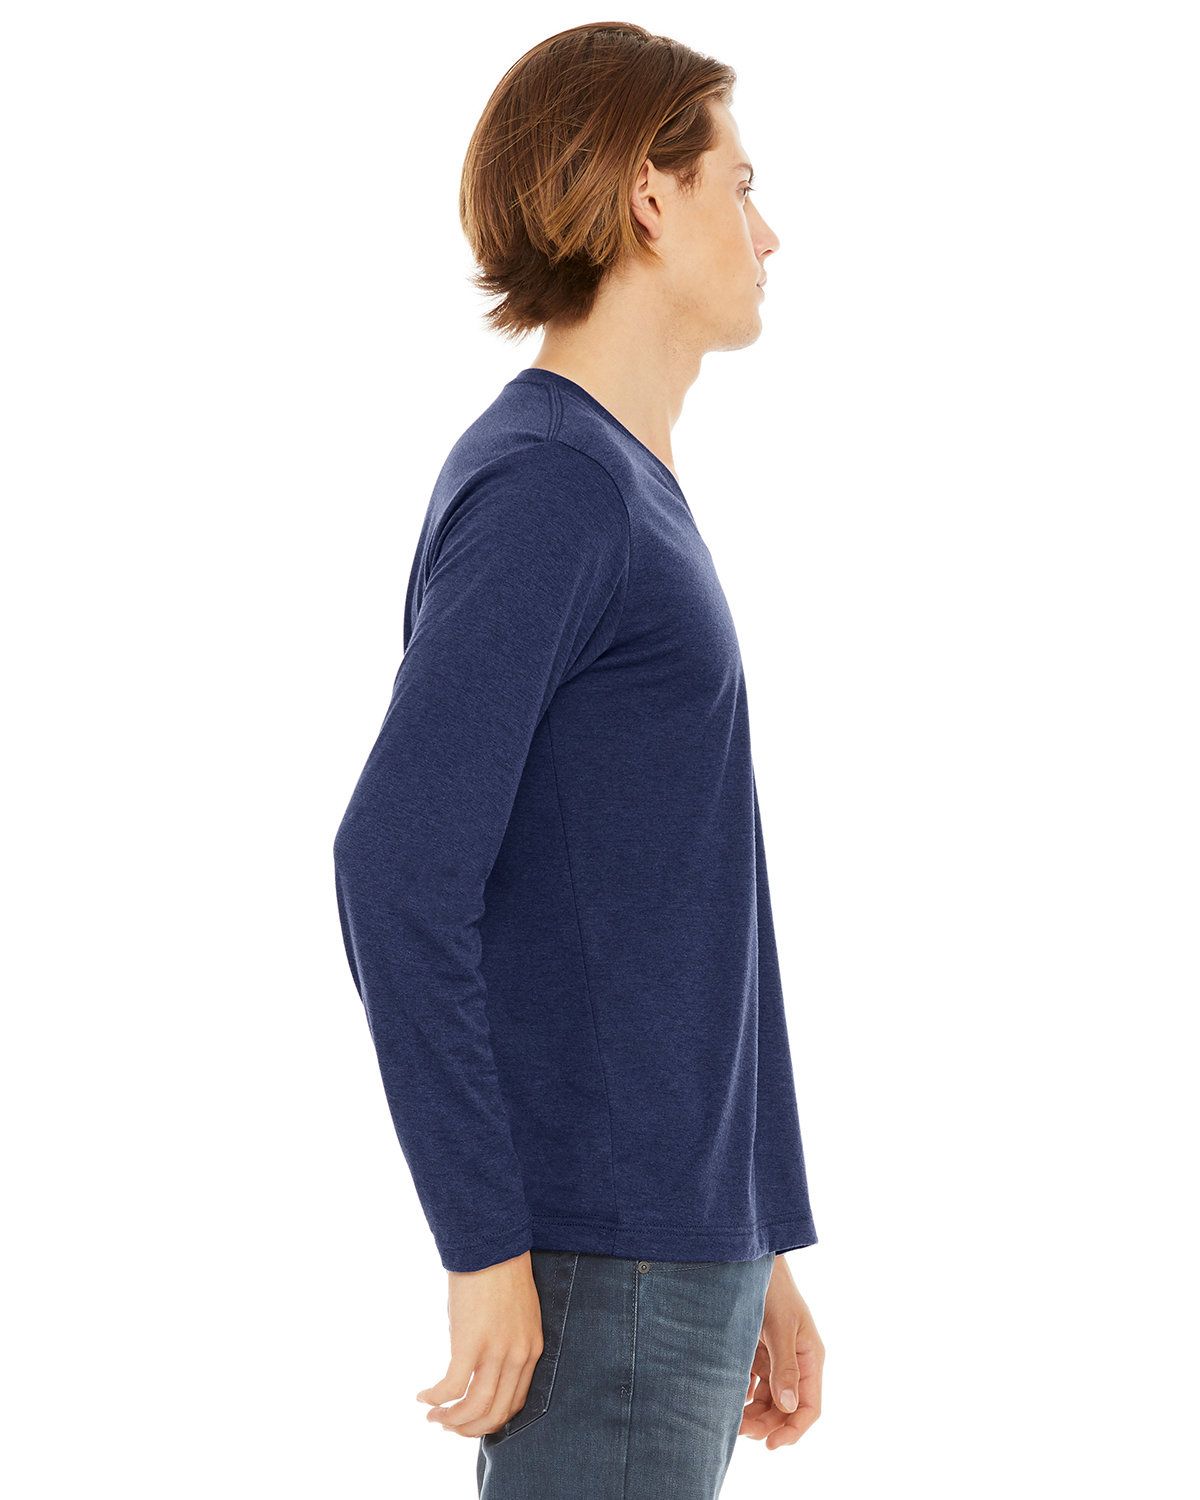 'Bella Canvas 3425 Unisex Jersey Long Sleeve V Neck T Shirt'